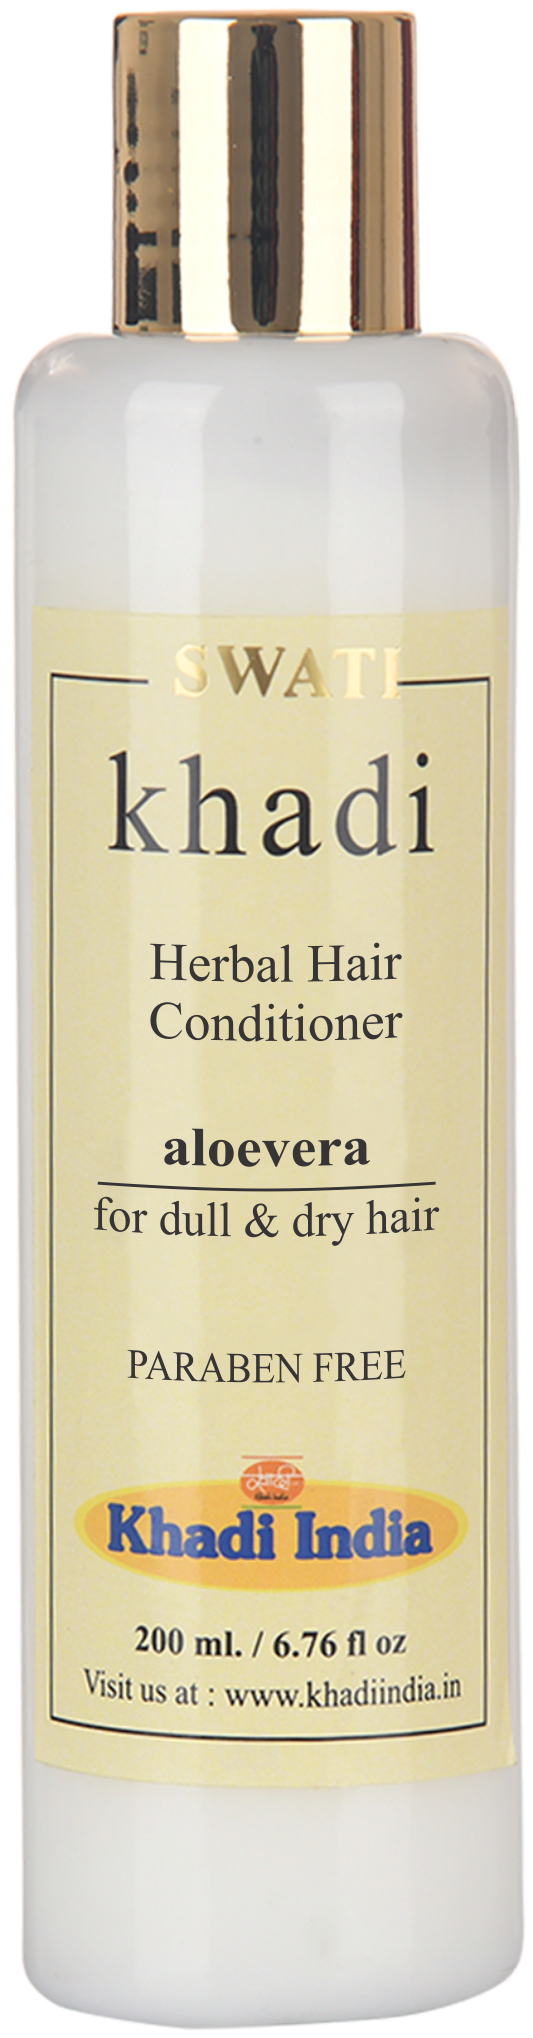 Khadi Ayurvedic Hair Conditioner -Alovera